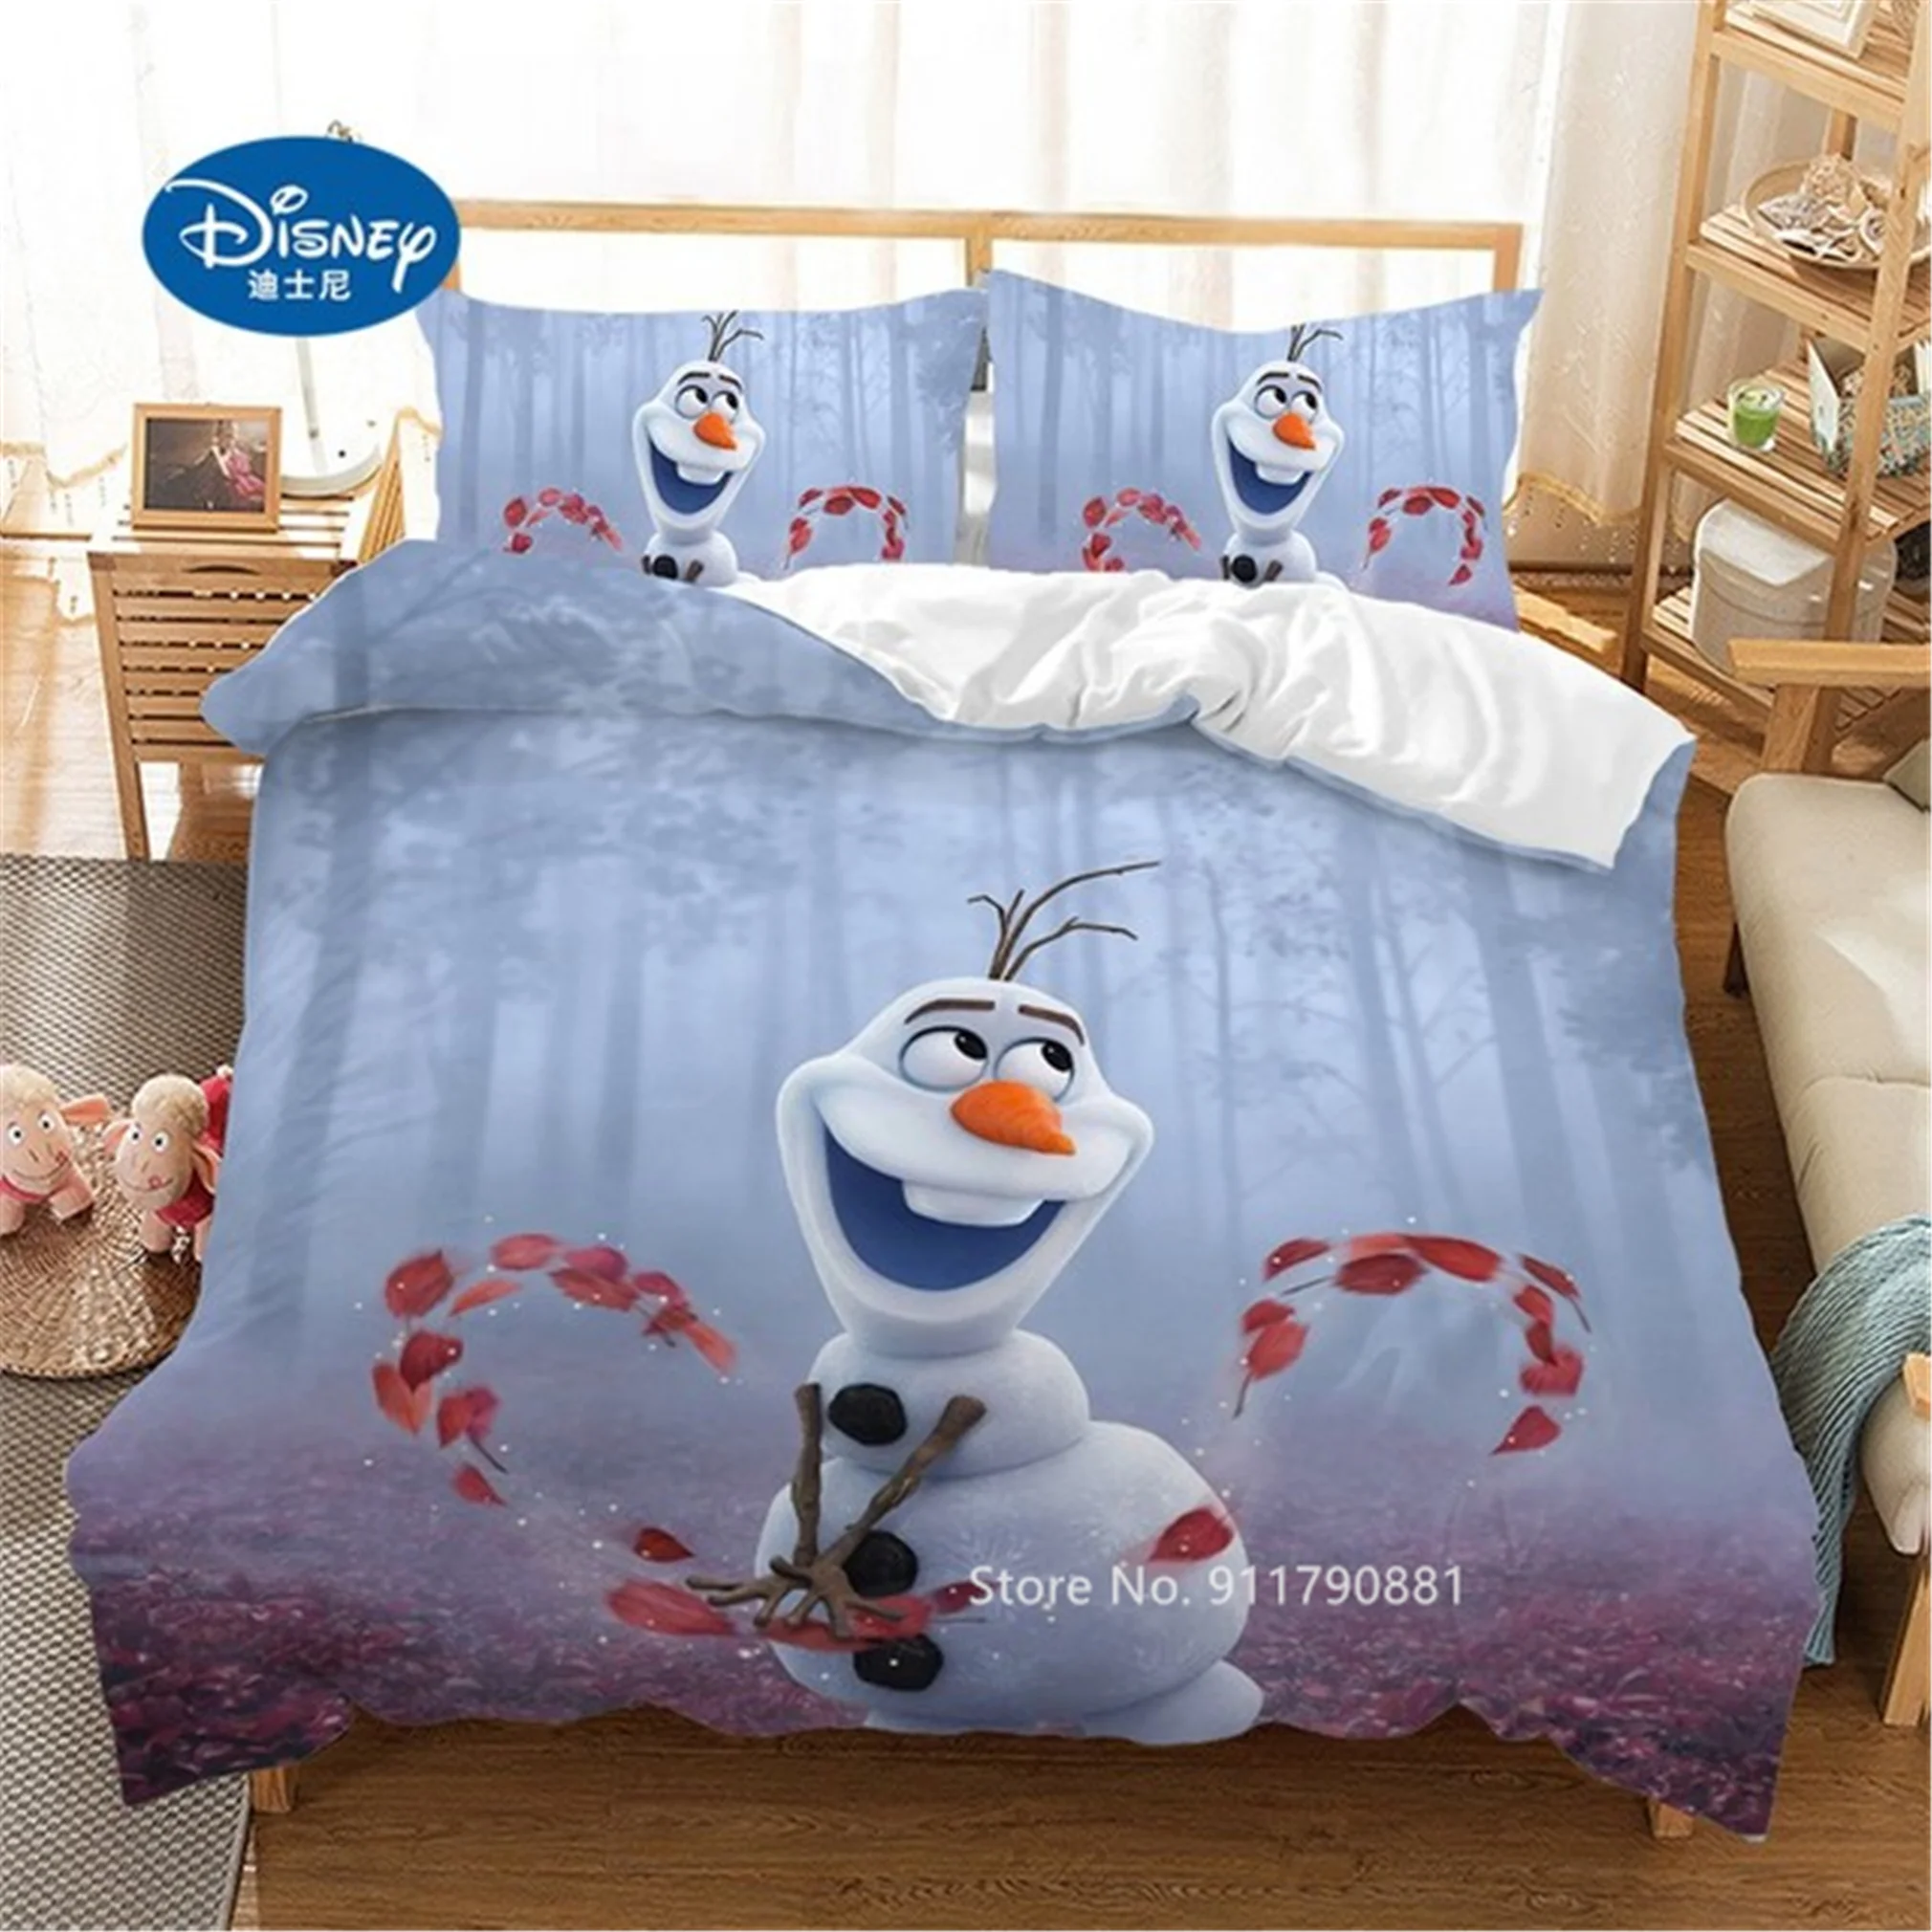 

Disney Animation Frozen Princess Elsana Bedding Set Double Queen Large Style Down Duvet Cover Pillowcase Children's Bedding Set